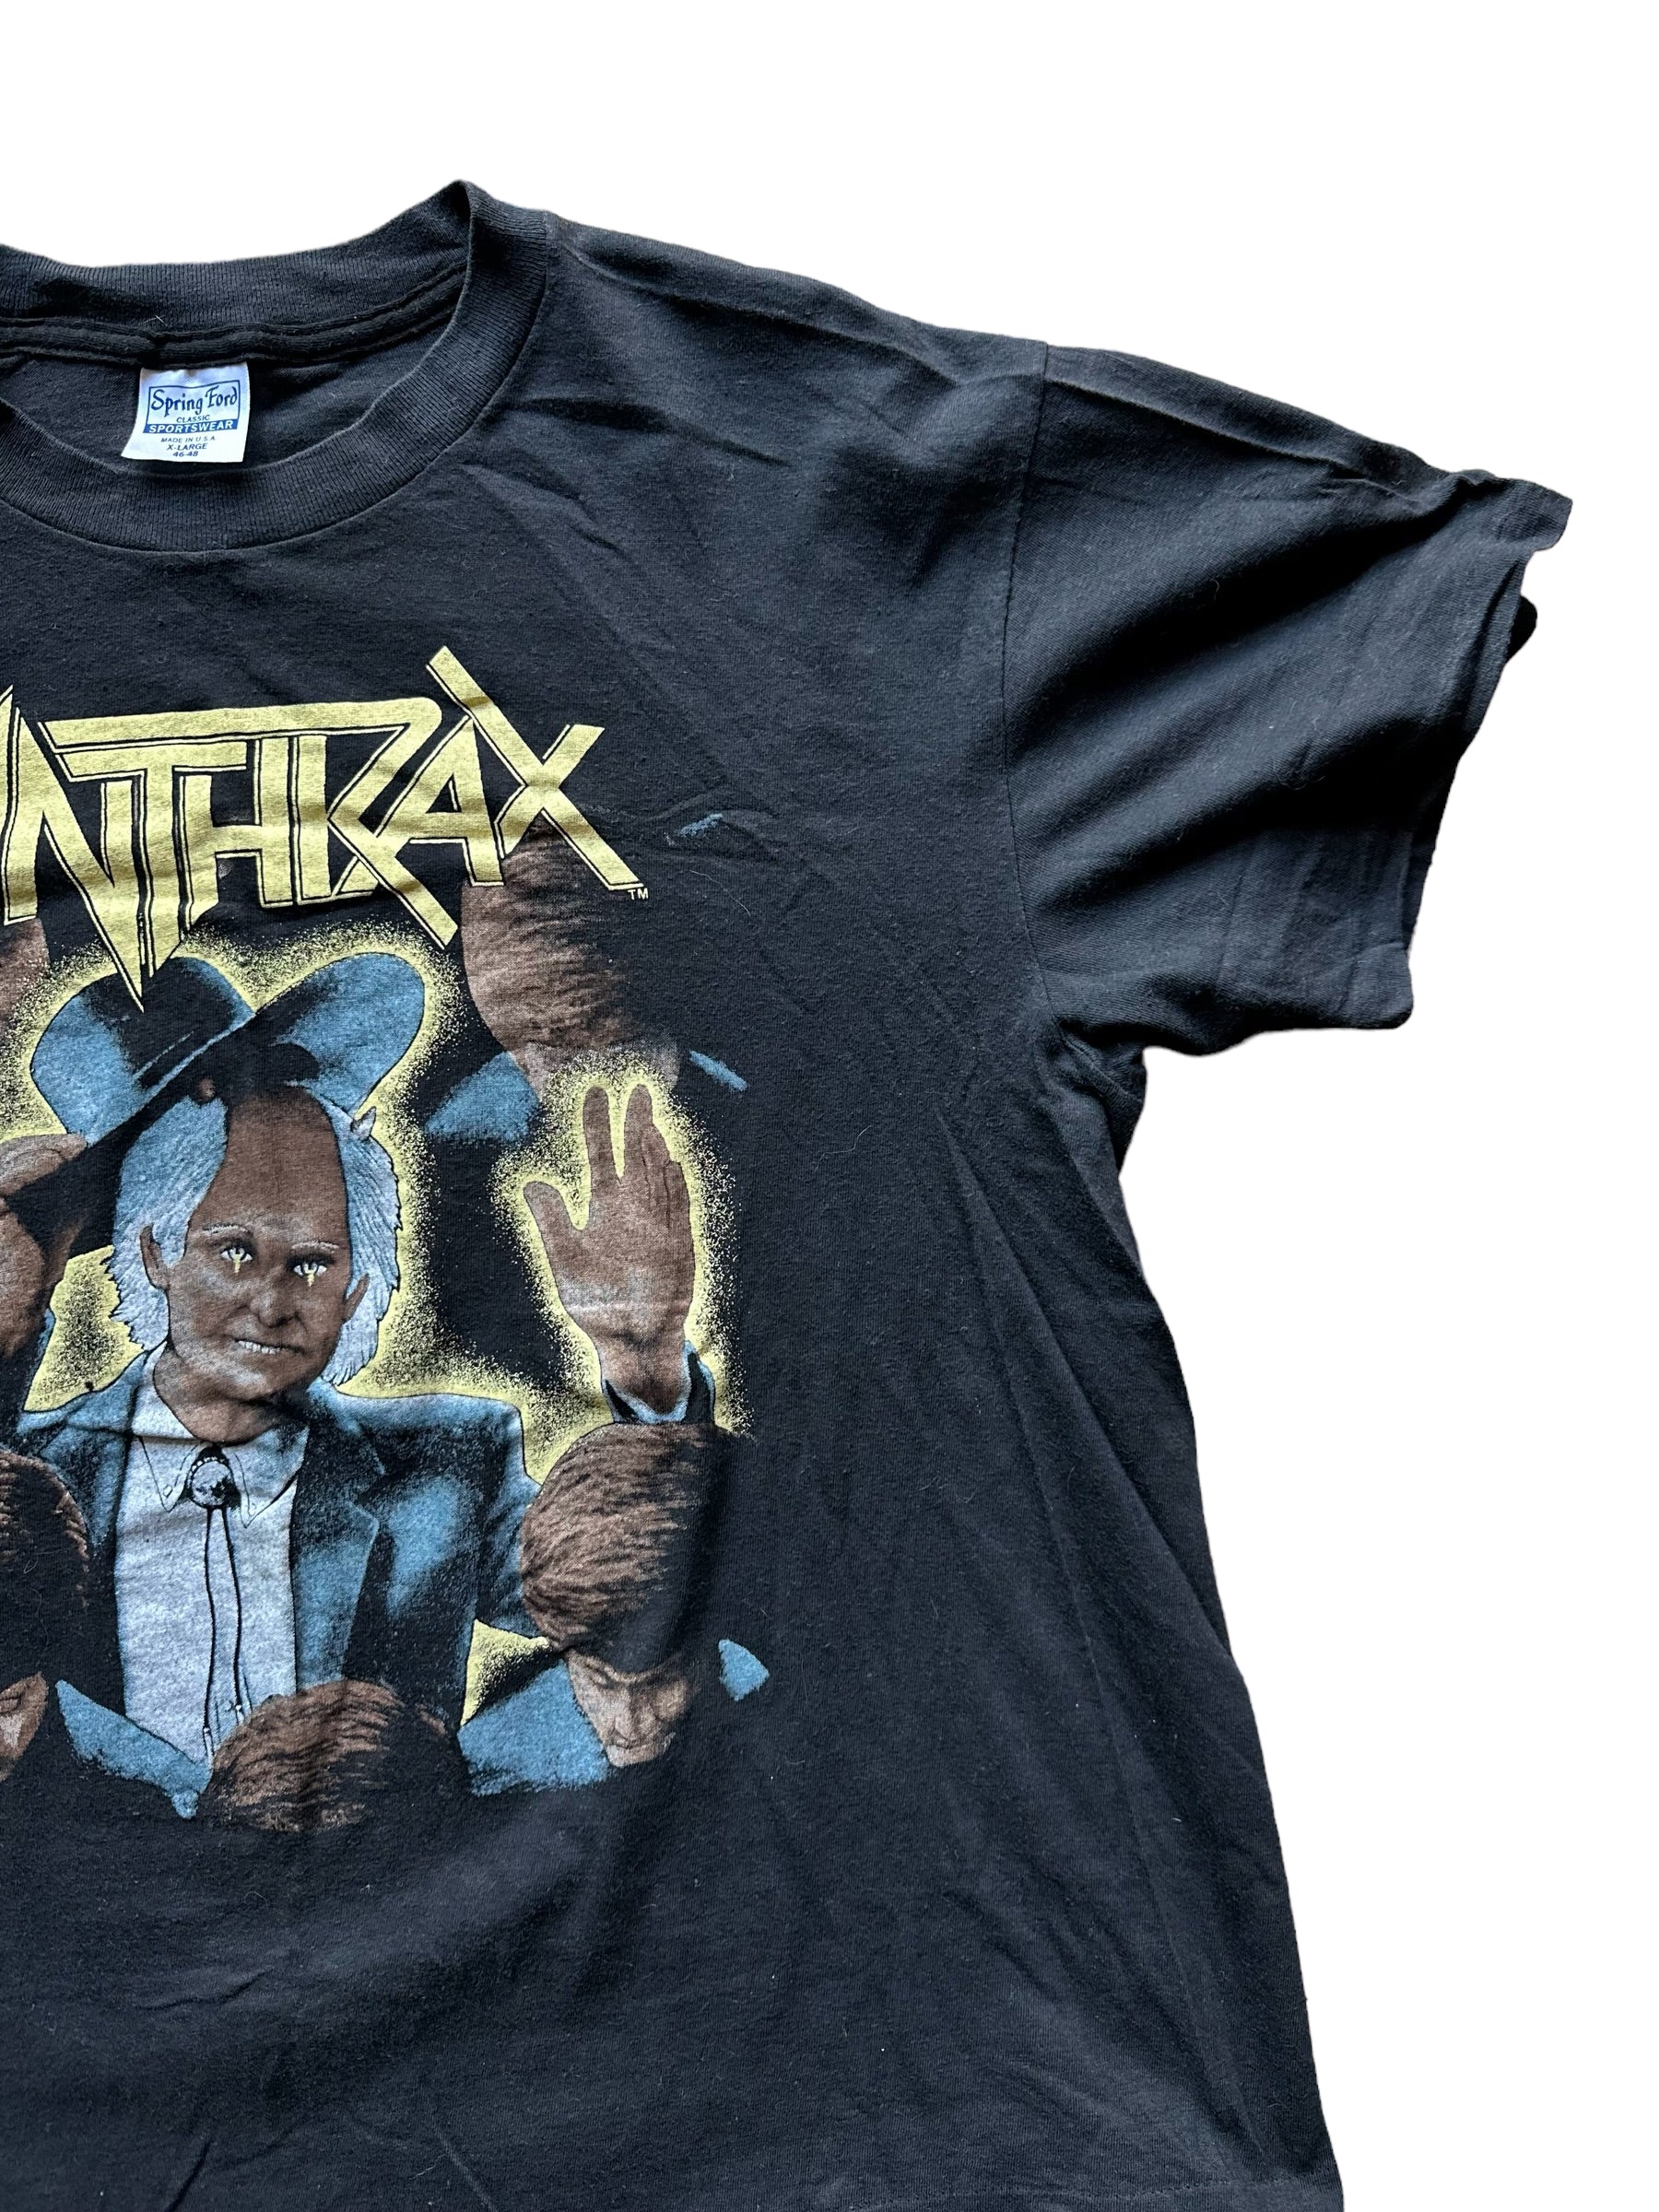 Vintage Anthrax Among the Living Tour Shirt Size XL | Barn Owl